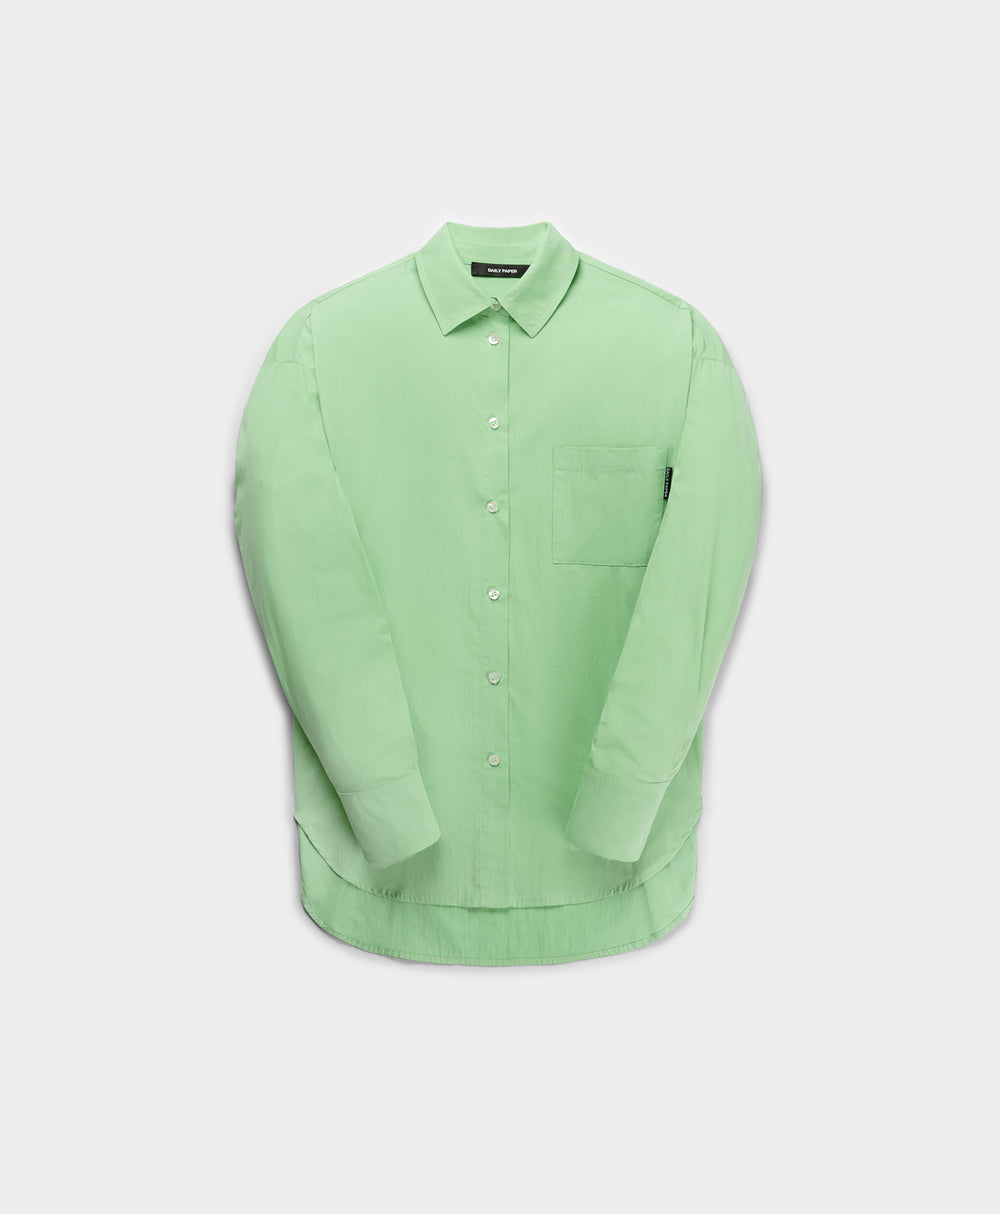 DP - Absinth Green Portia Shirt - Packshot - Rear